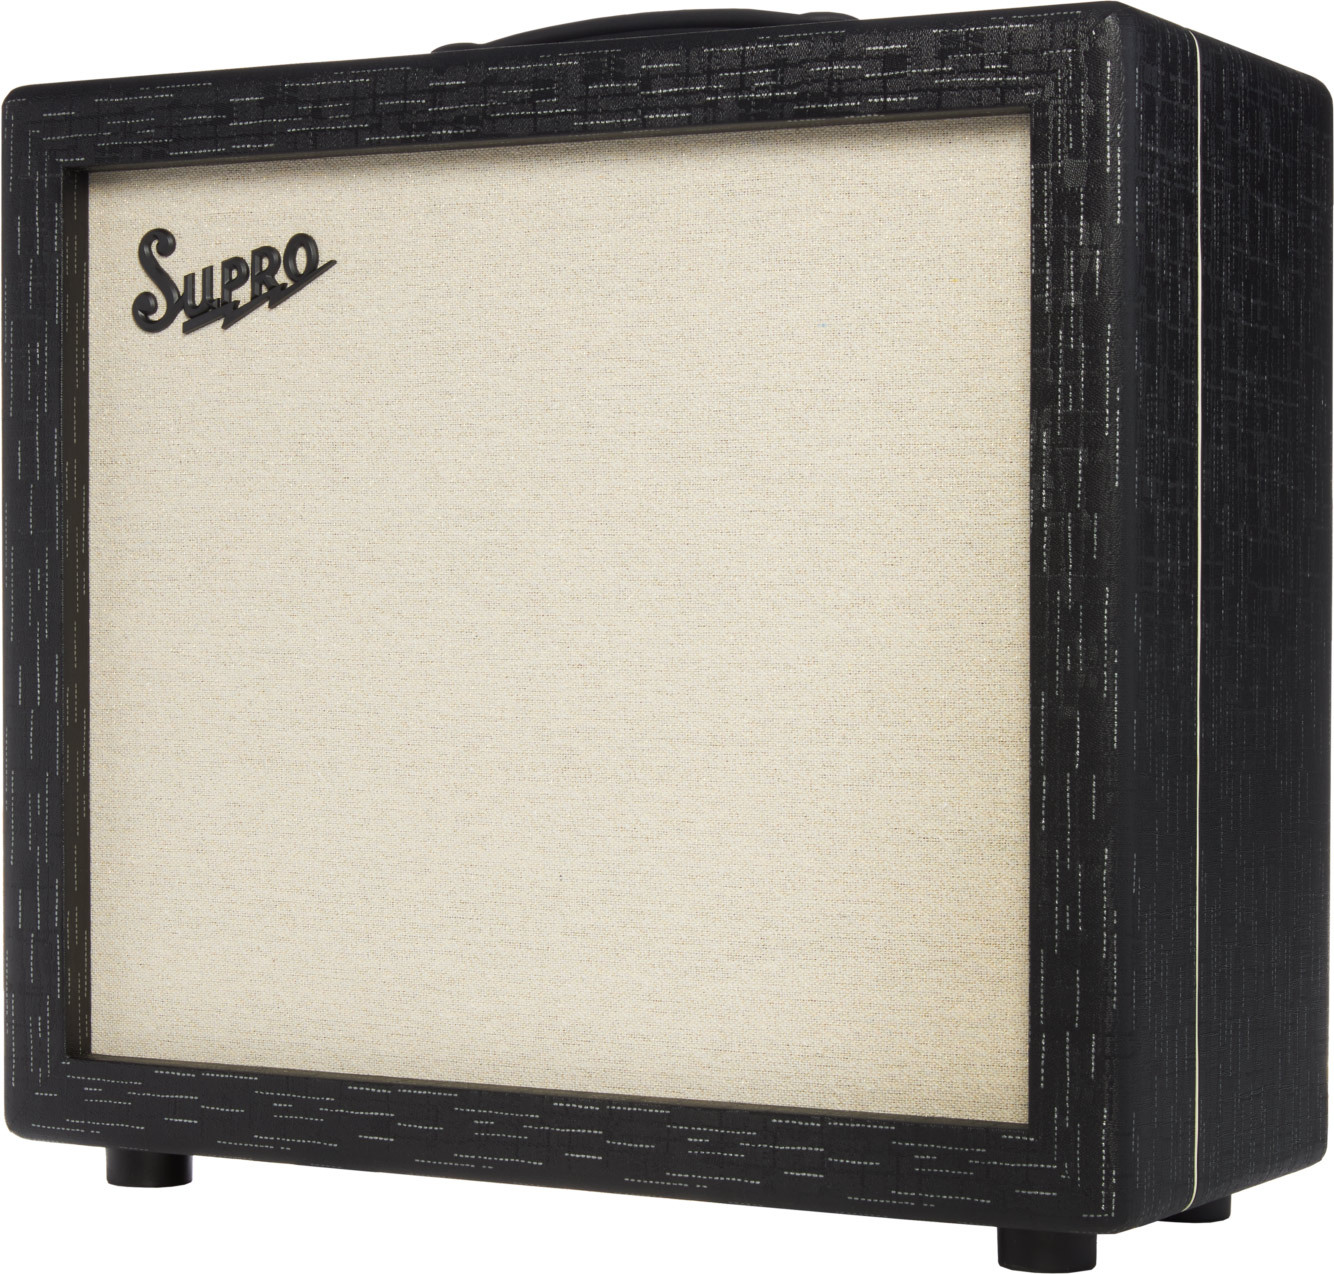 Supro Royale 1x12 Guitar Cab 1732 1x12 75w 8-ohms Black Scandia - Elektrische gitaar speakerkast - Main picture